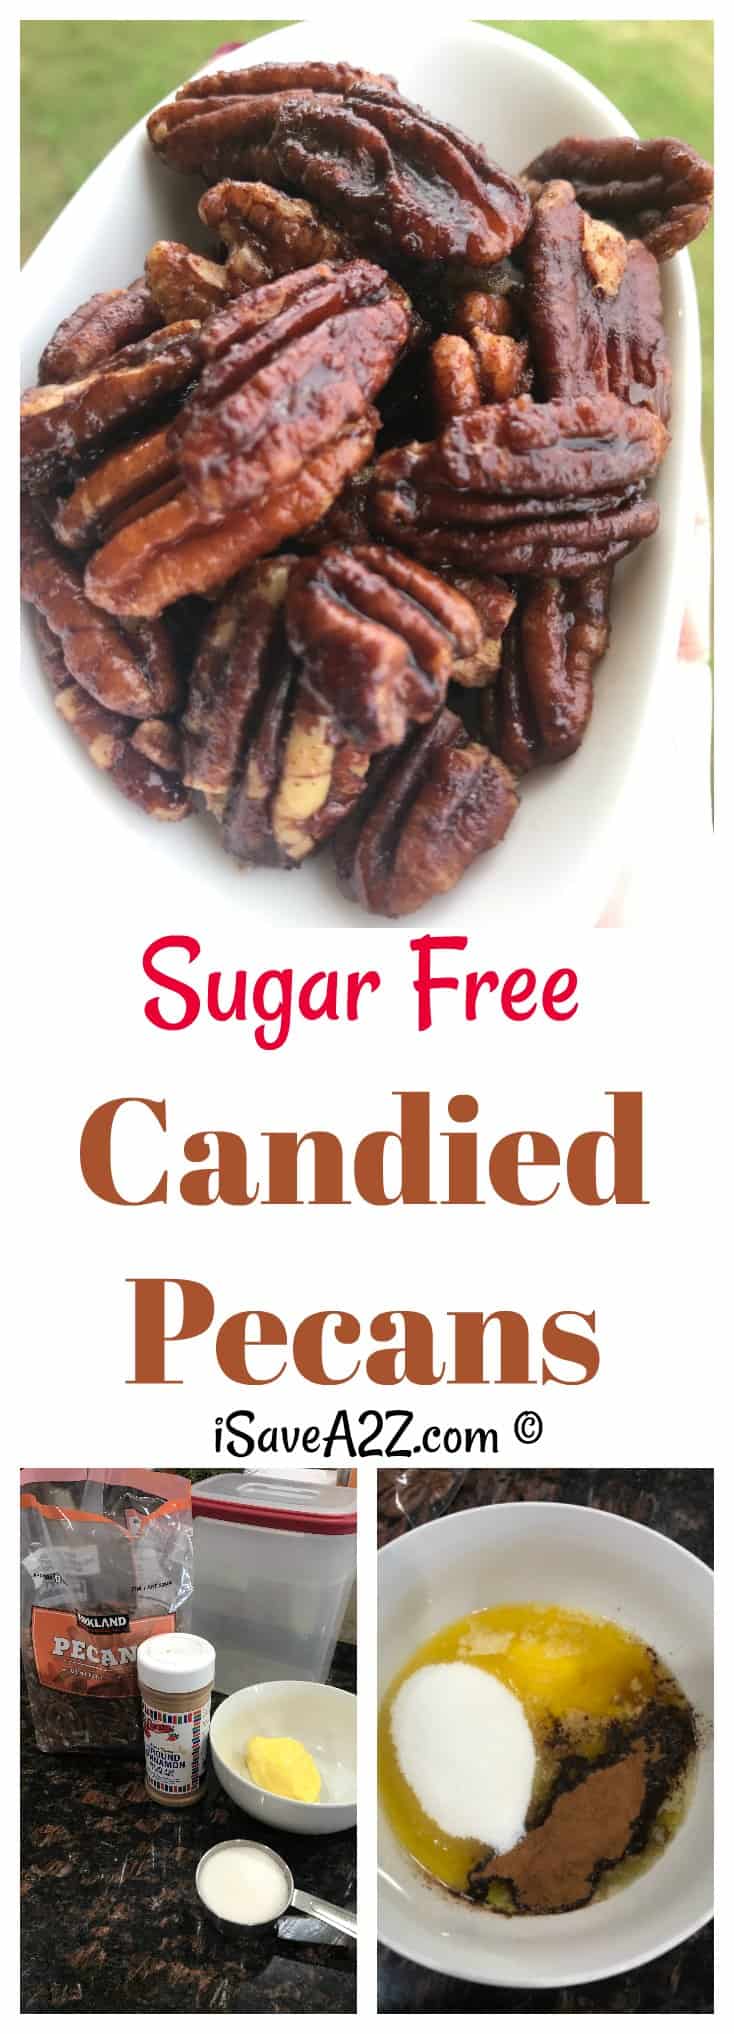 Sugar-Free Candied Pecans Recipe